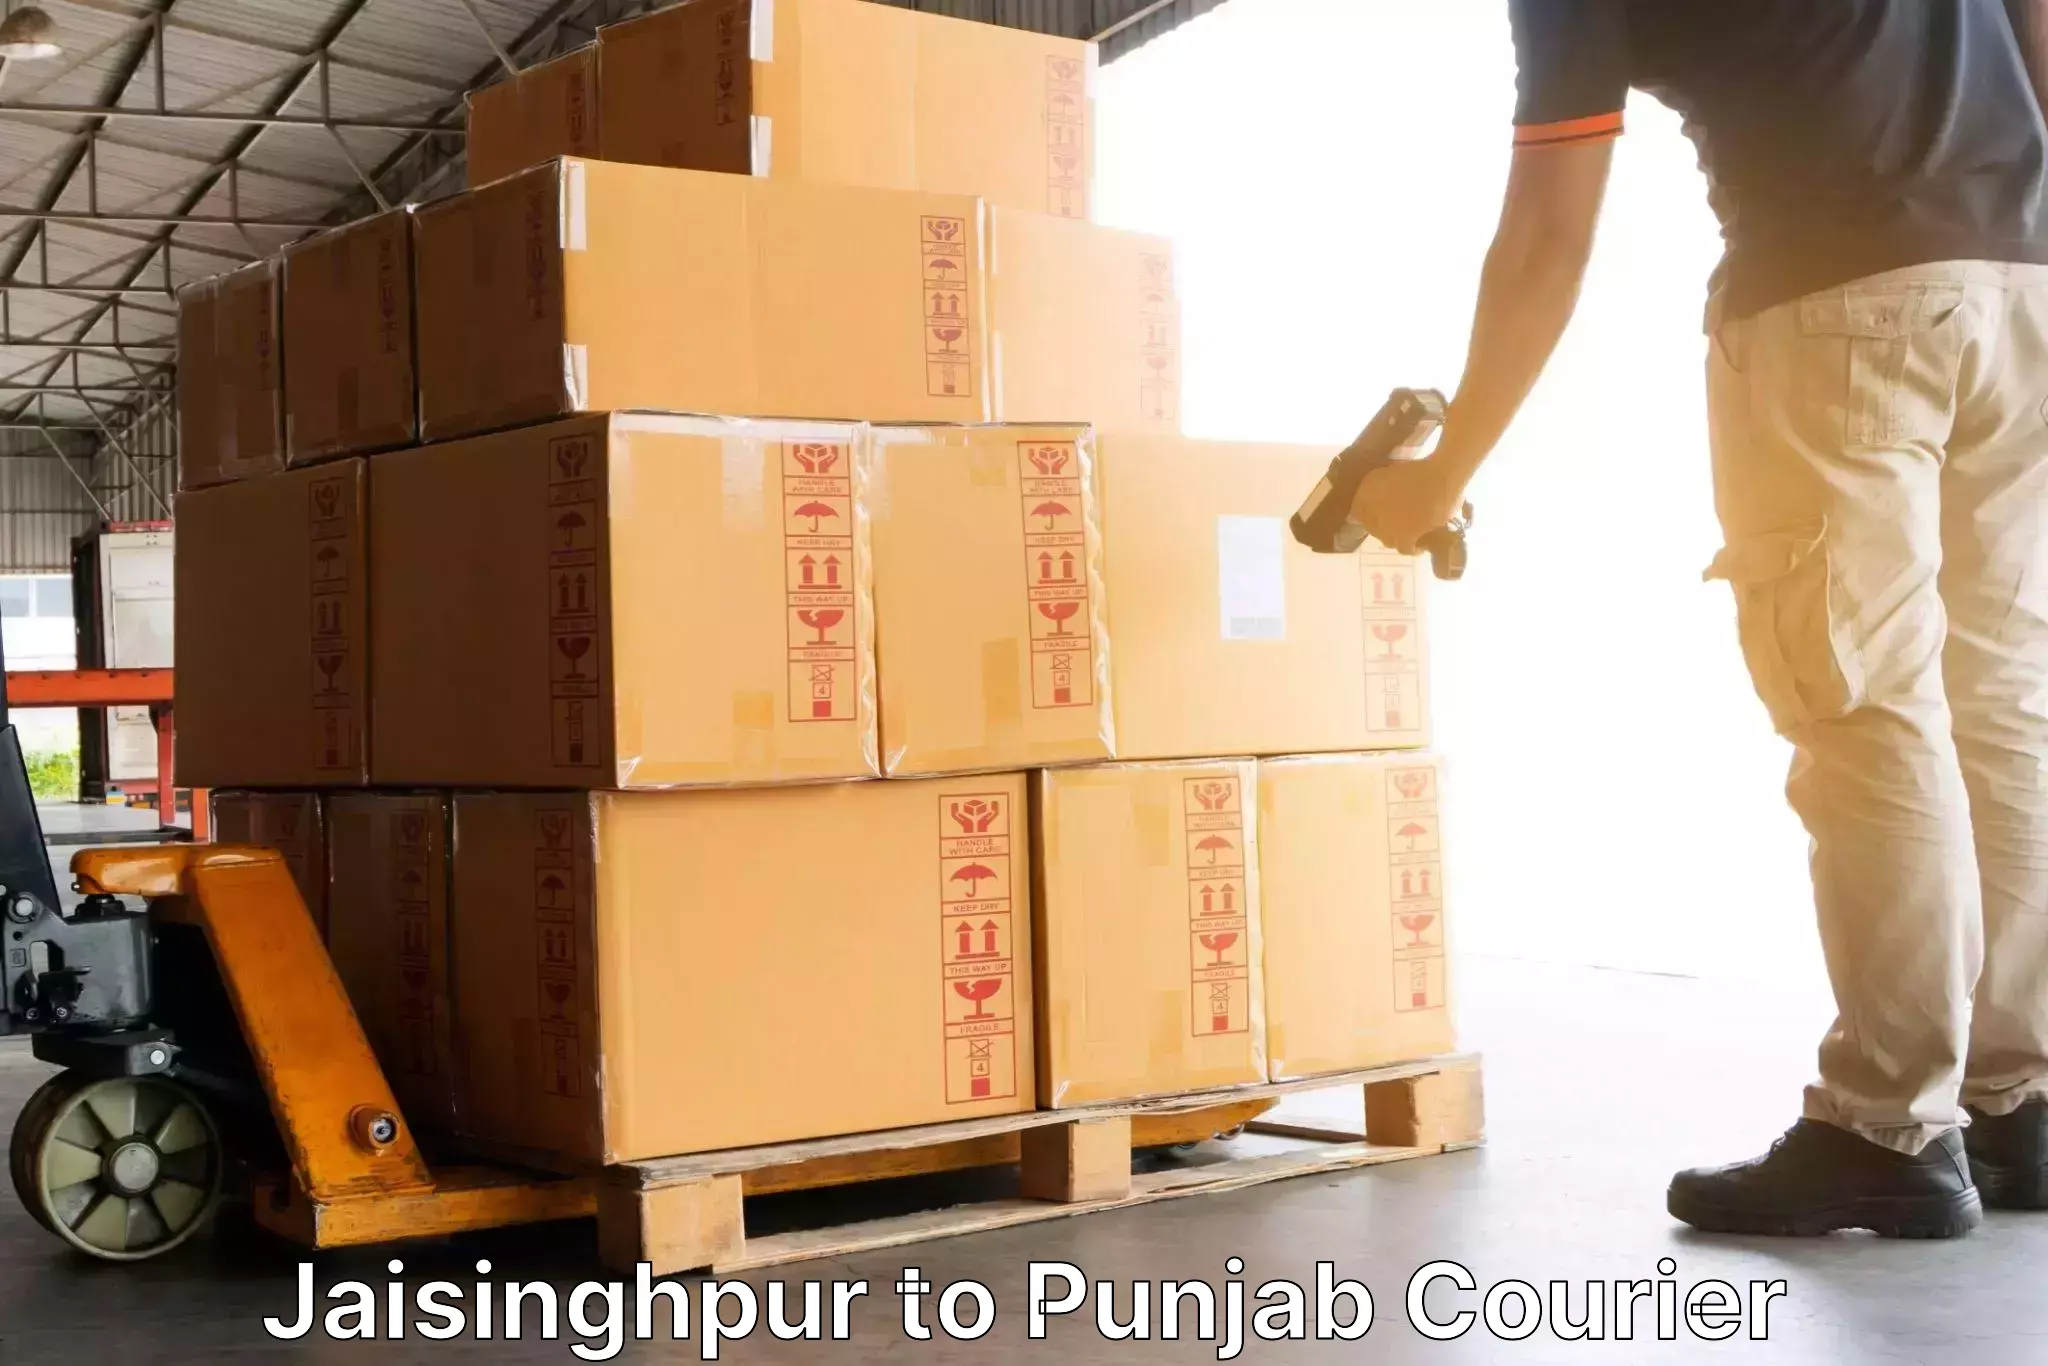 Digital courier platforms Jaisinghpur to Fatehgarh Sahib